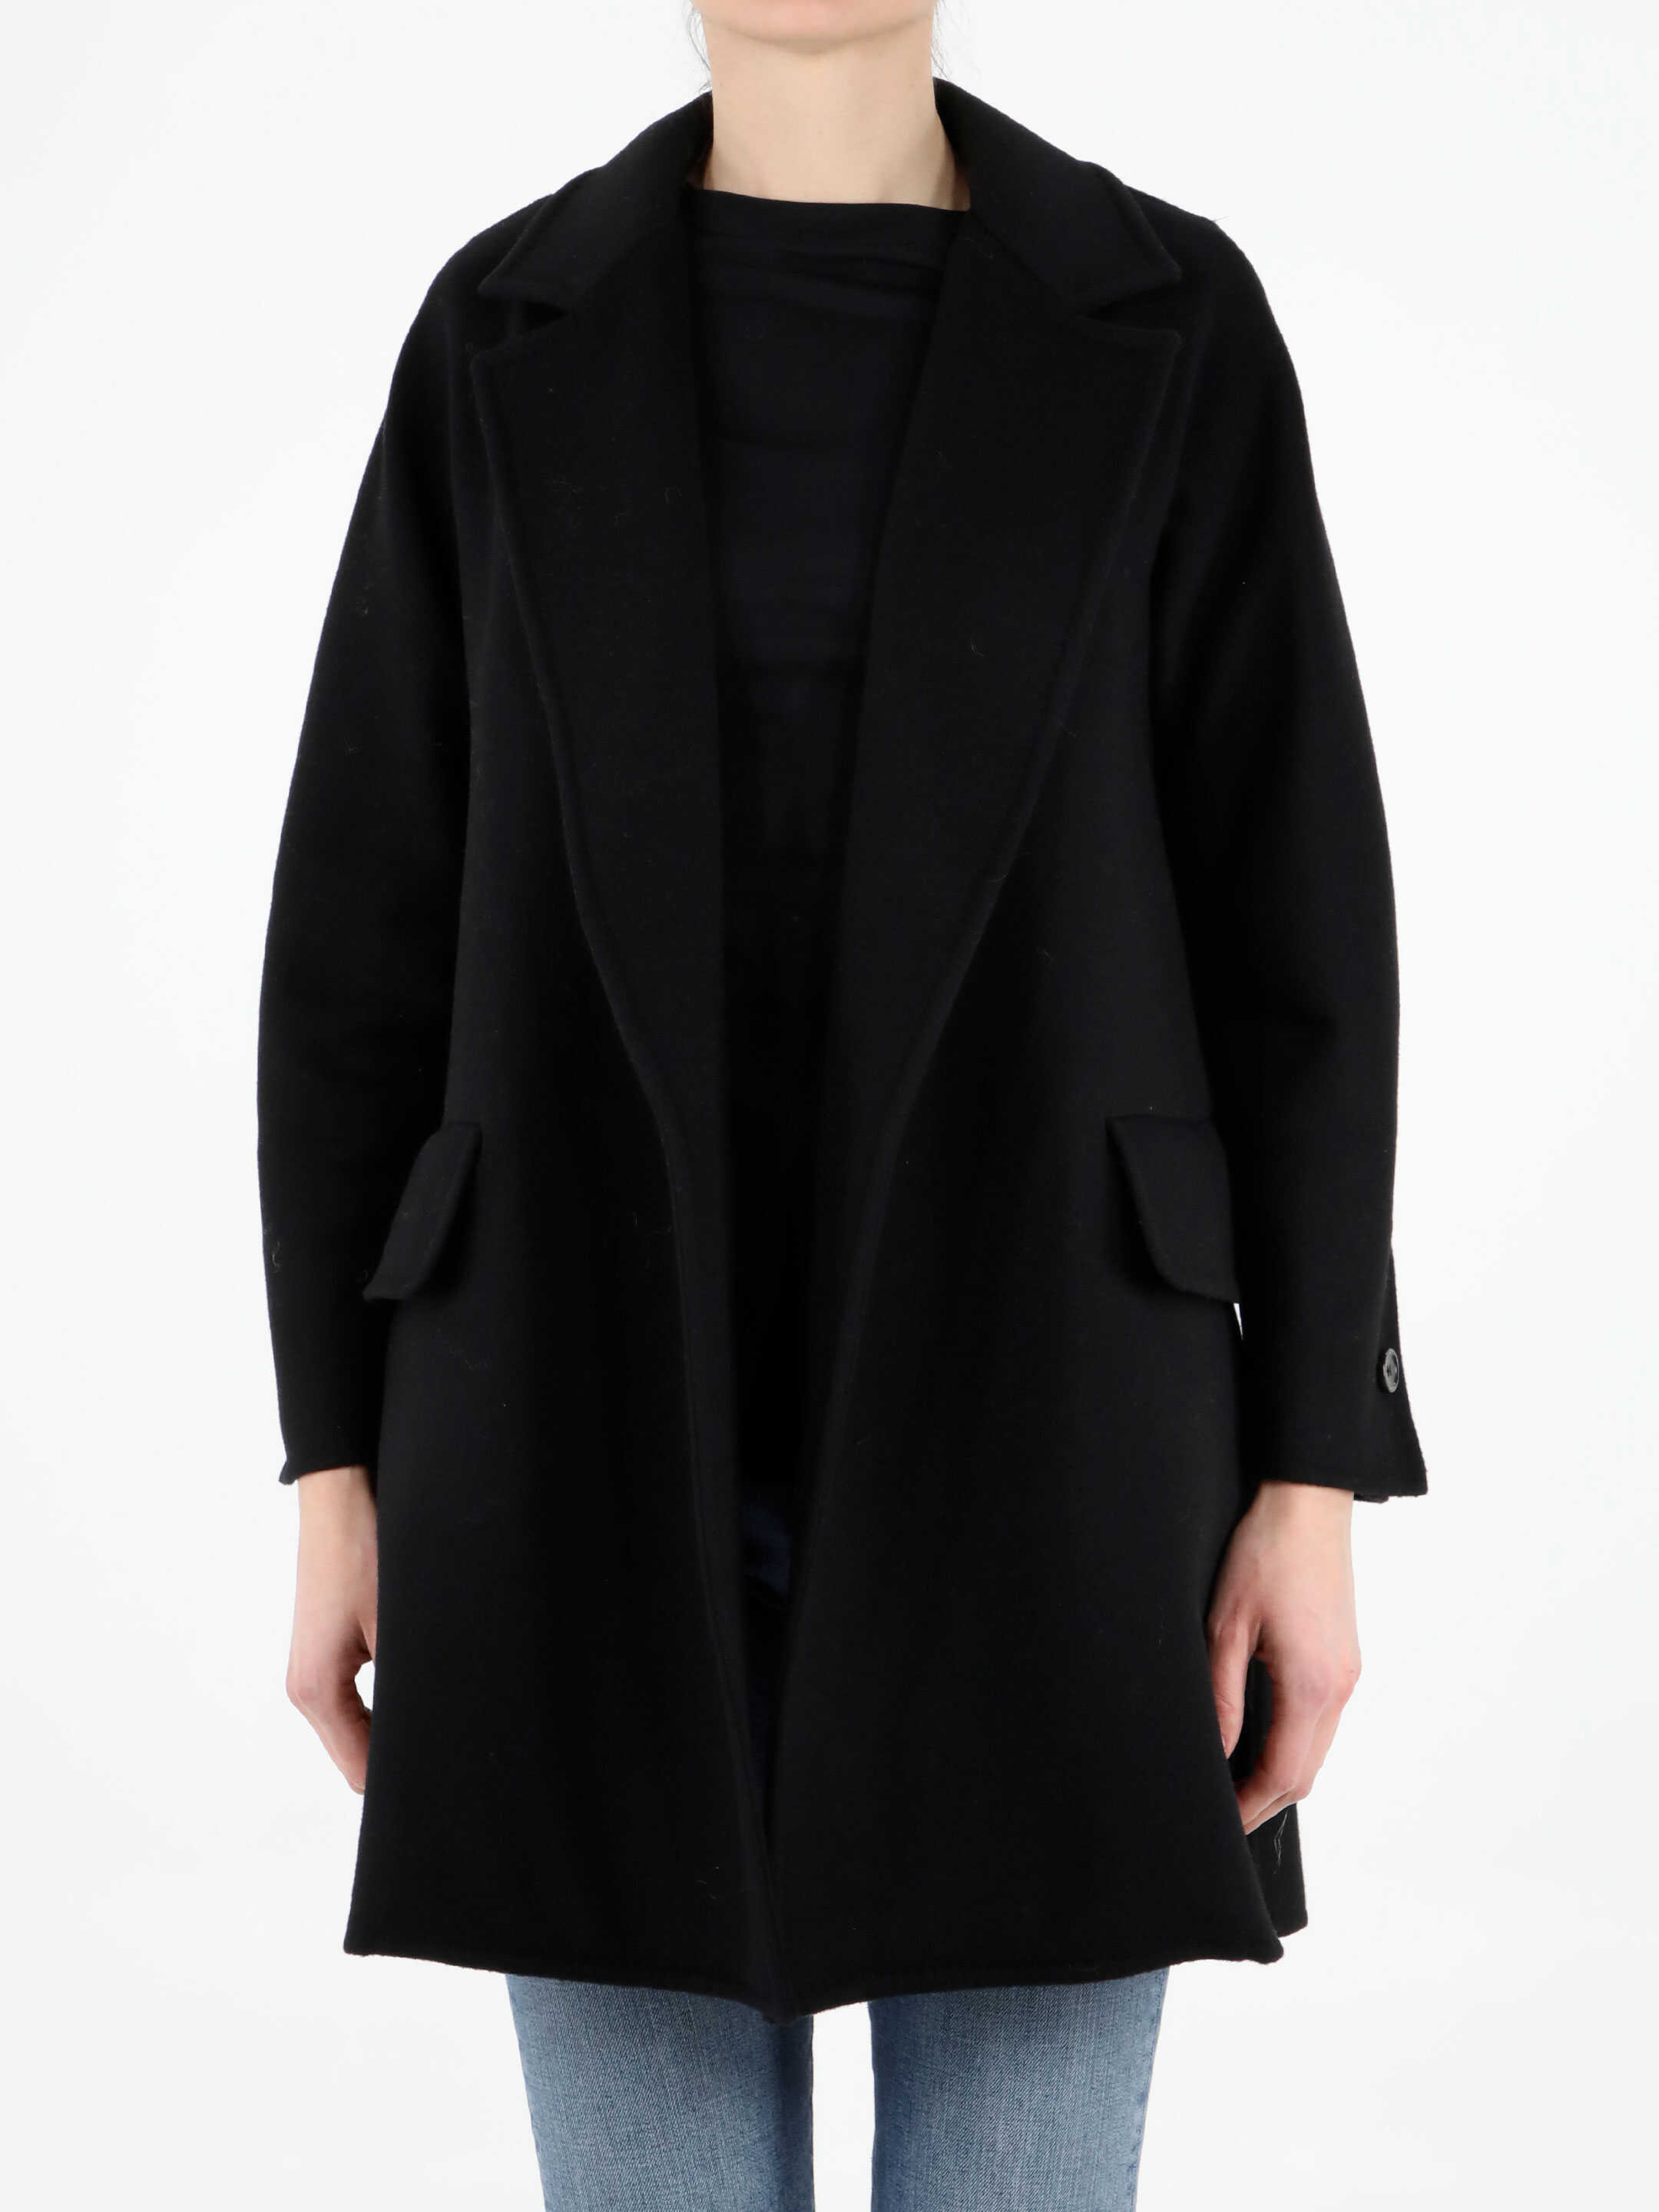 Max Mara Wool And Cashmere Pea Coat Black image